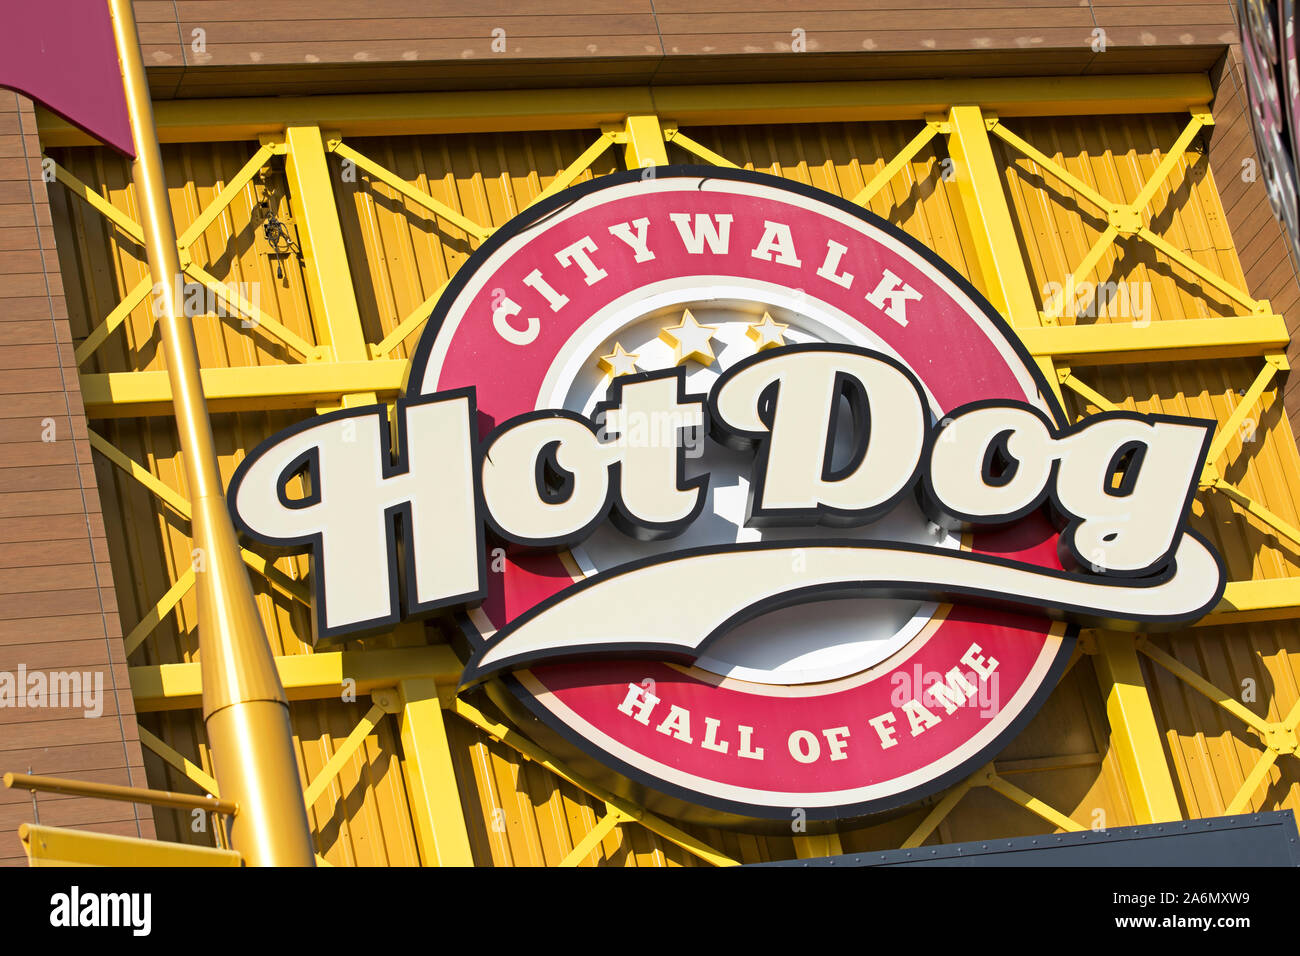 CityWalk Hot Dog, signe de la renommée du baseball, Restaurant, Restaurant à thème, les Studios Universal CityWalk Resort, Orlando, USA Banque D'Images